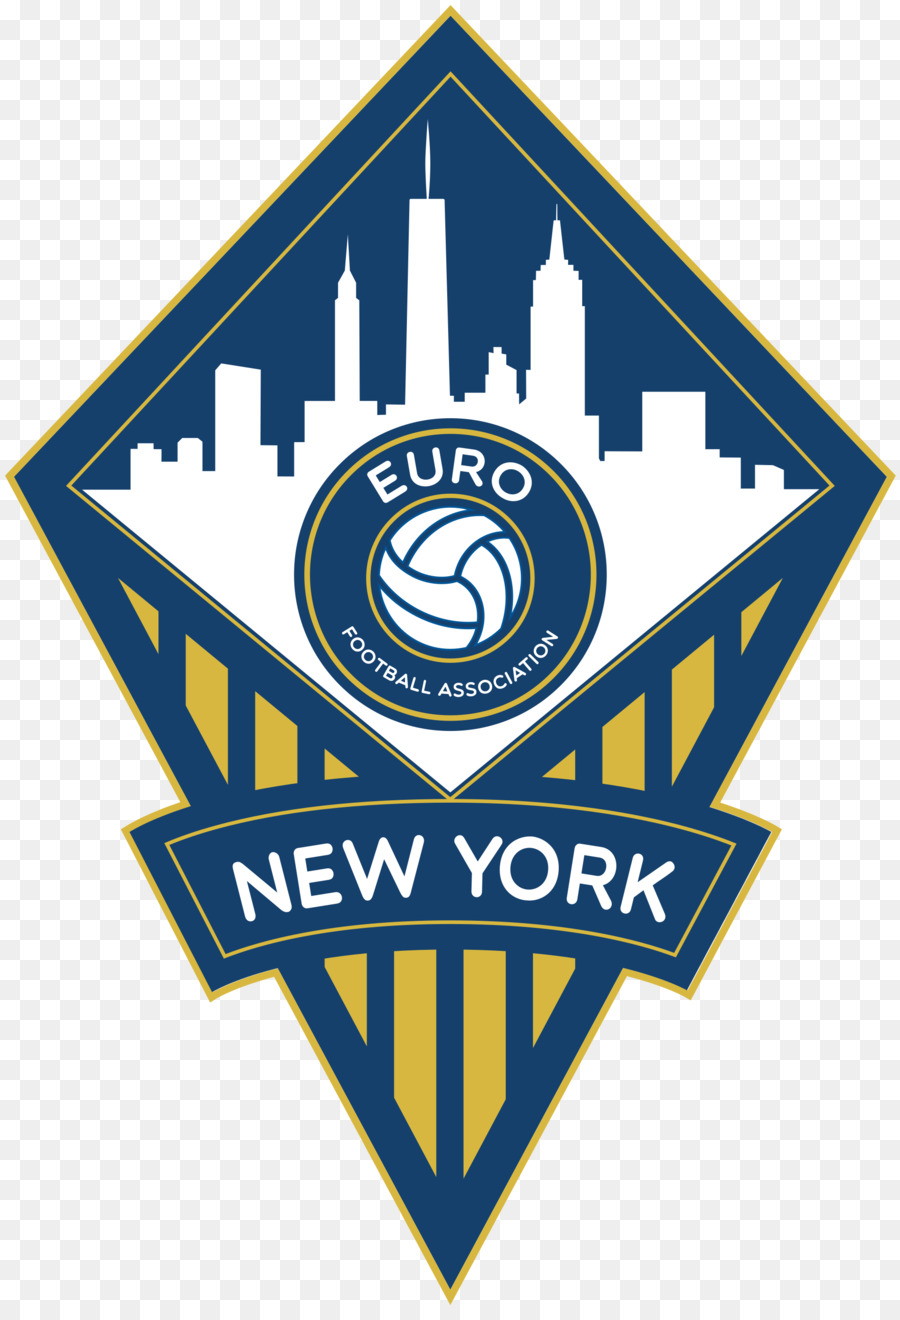 FA Euro New York 2018 điều khiển mùa Evergreen FC 2017 điều khiển mùa bóng Đá - euro 2016 mục tiêu